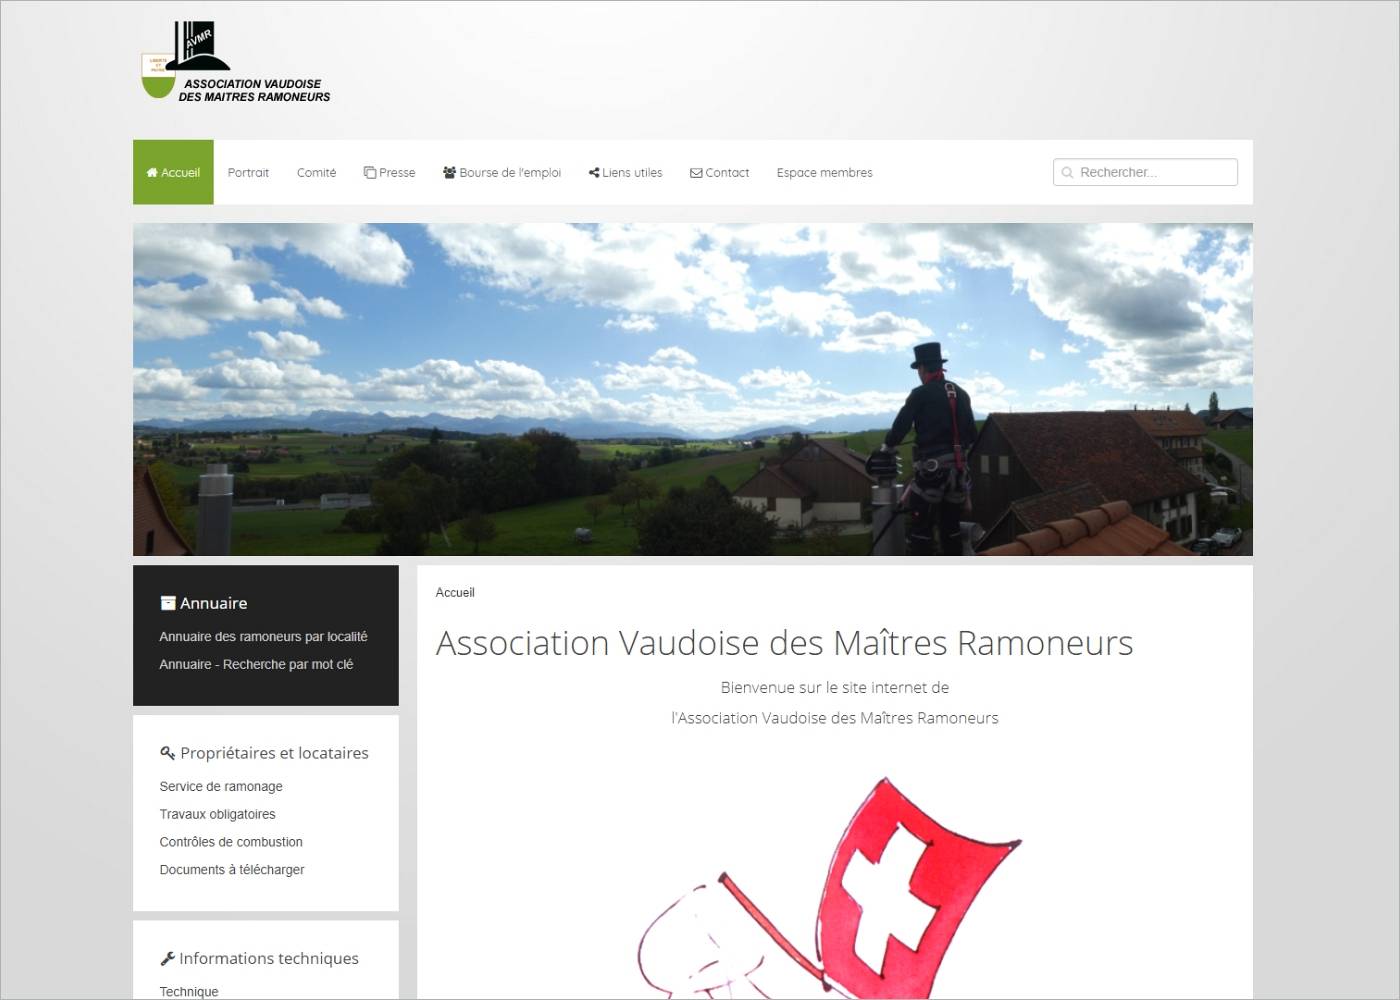 AVMR ♦ Association Vaudoise des Maîtres Ramoneurs